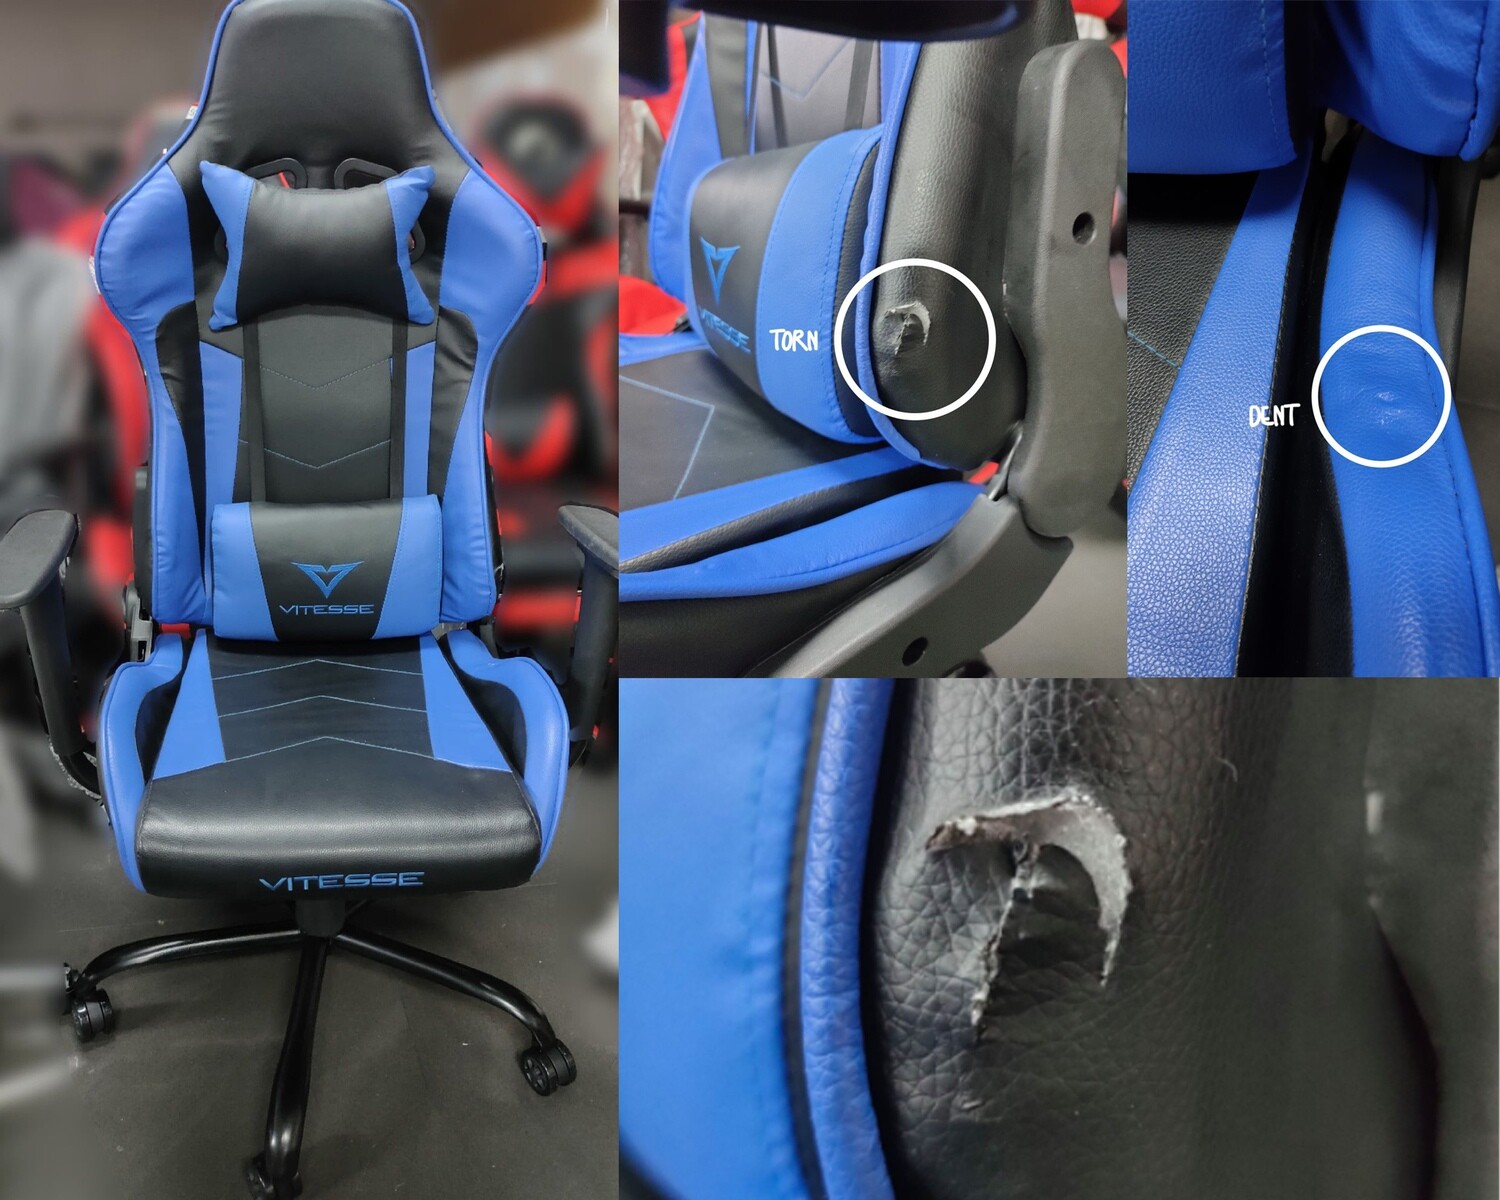 (Sale) OFX Vitesse Steel Base Gaming Chair (Black+Blue) (Backrest Torn / Seat Cushion Dent)